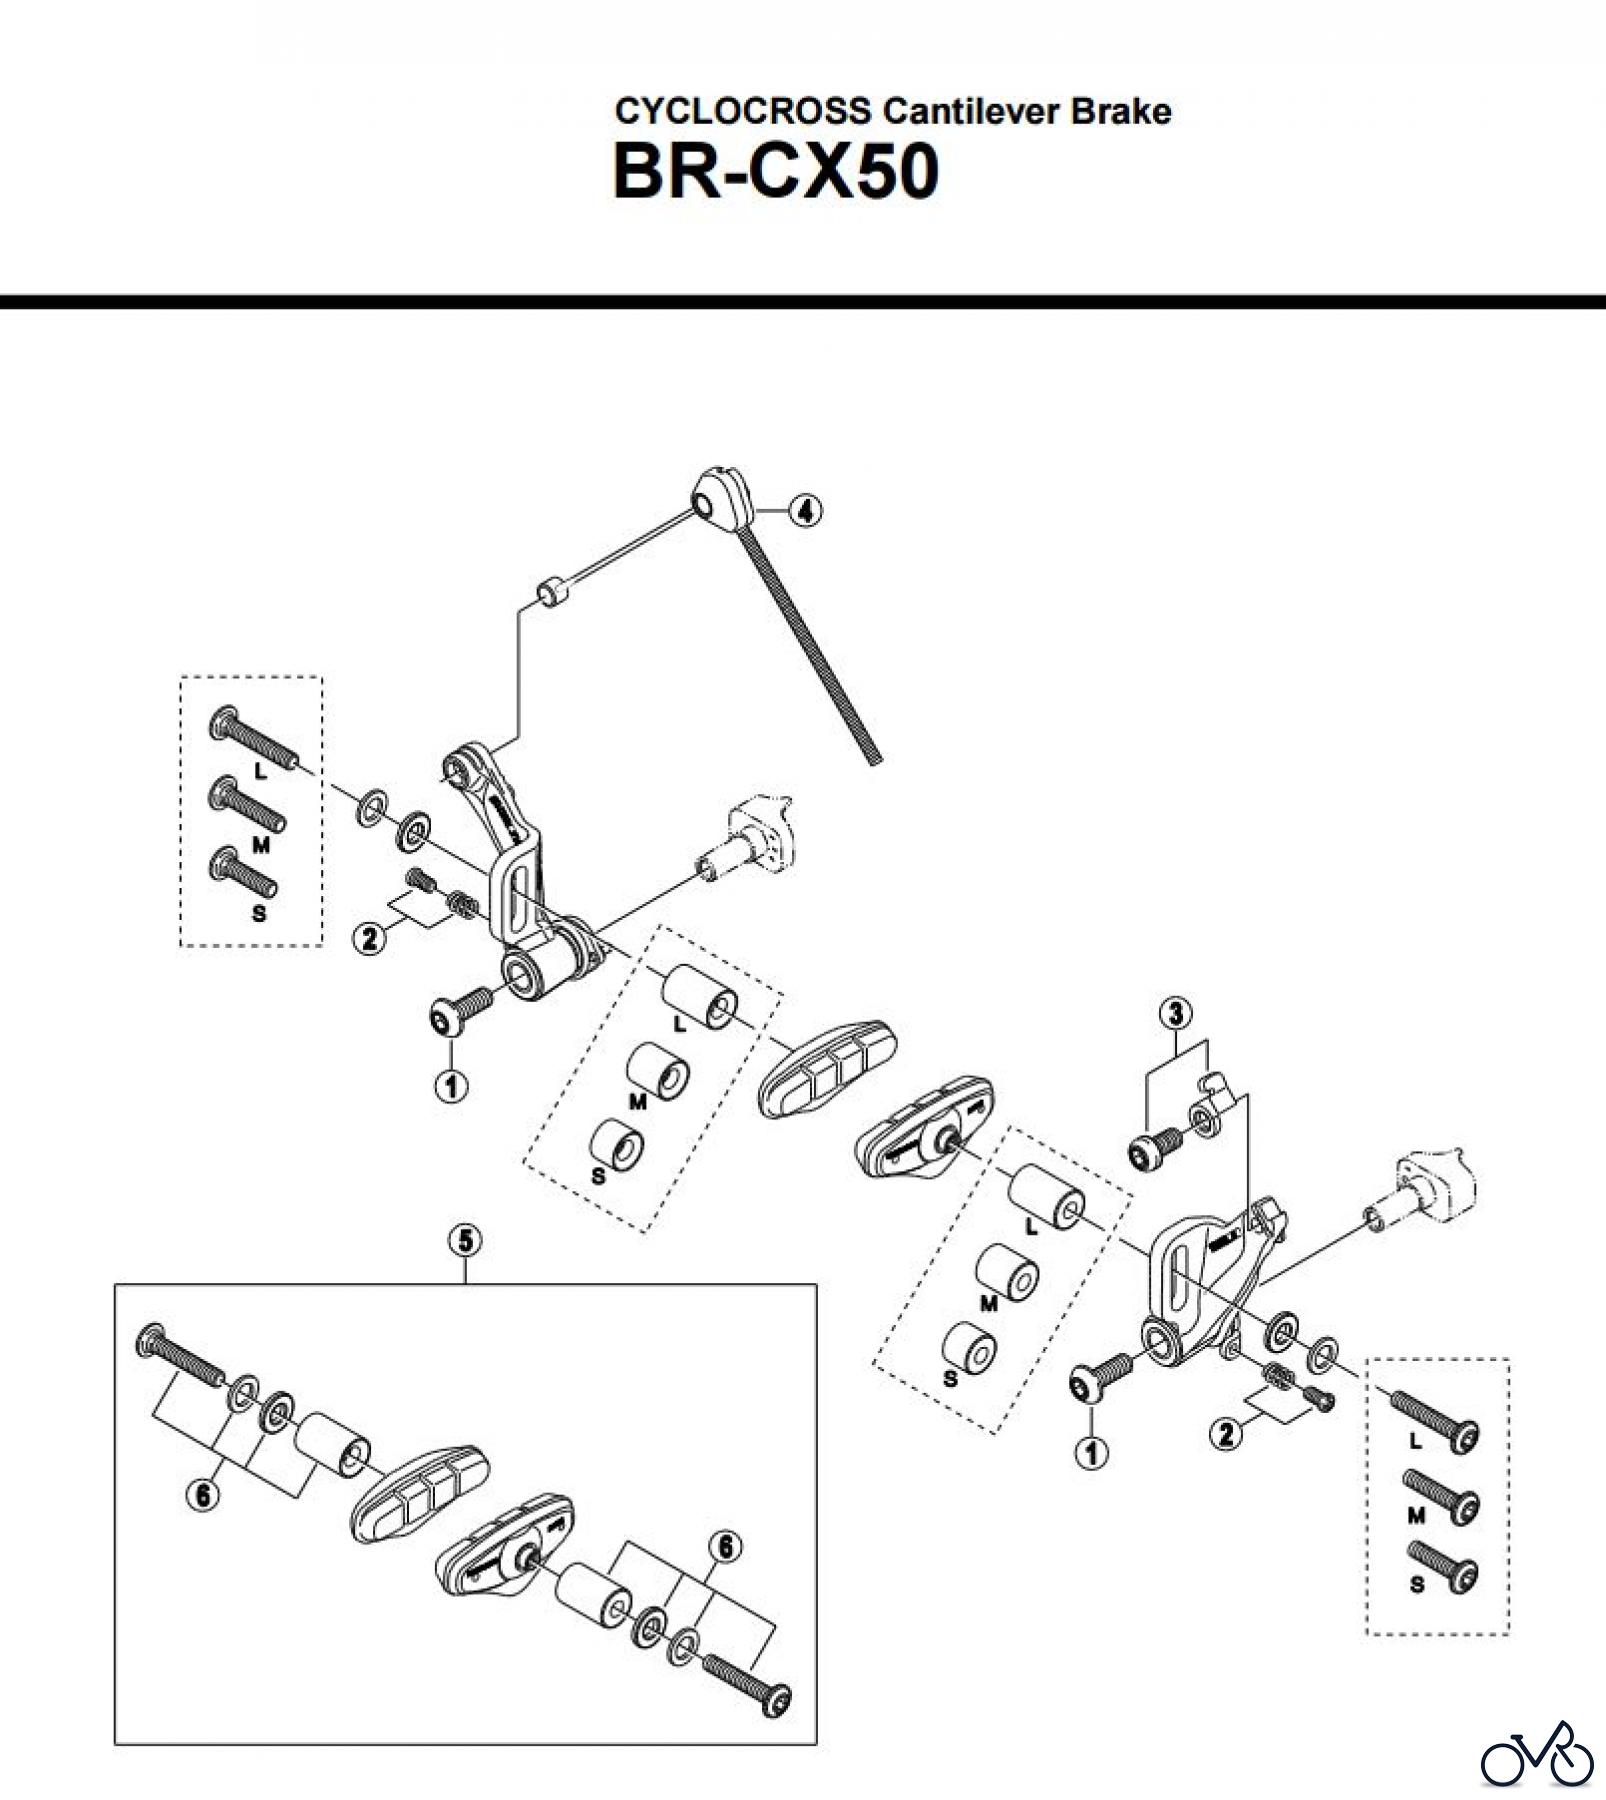  Shimano BR Brake - Bremse BR-CX50 -3222A  CYCLOCROSS Cantilever Brake